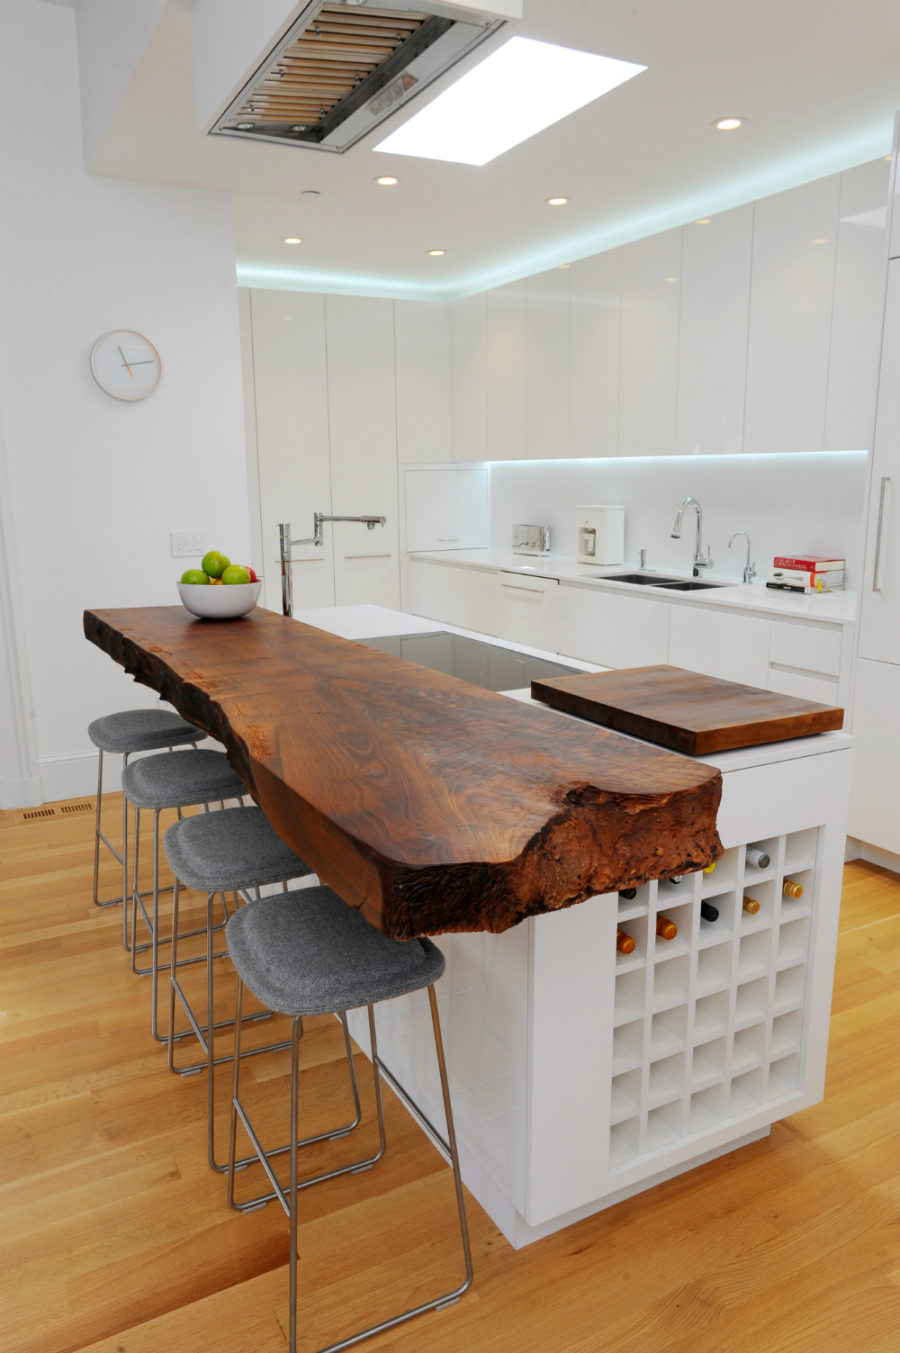 Live-edge kitchen countertop